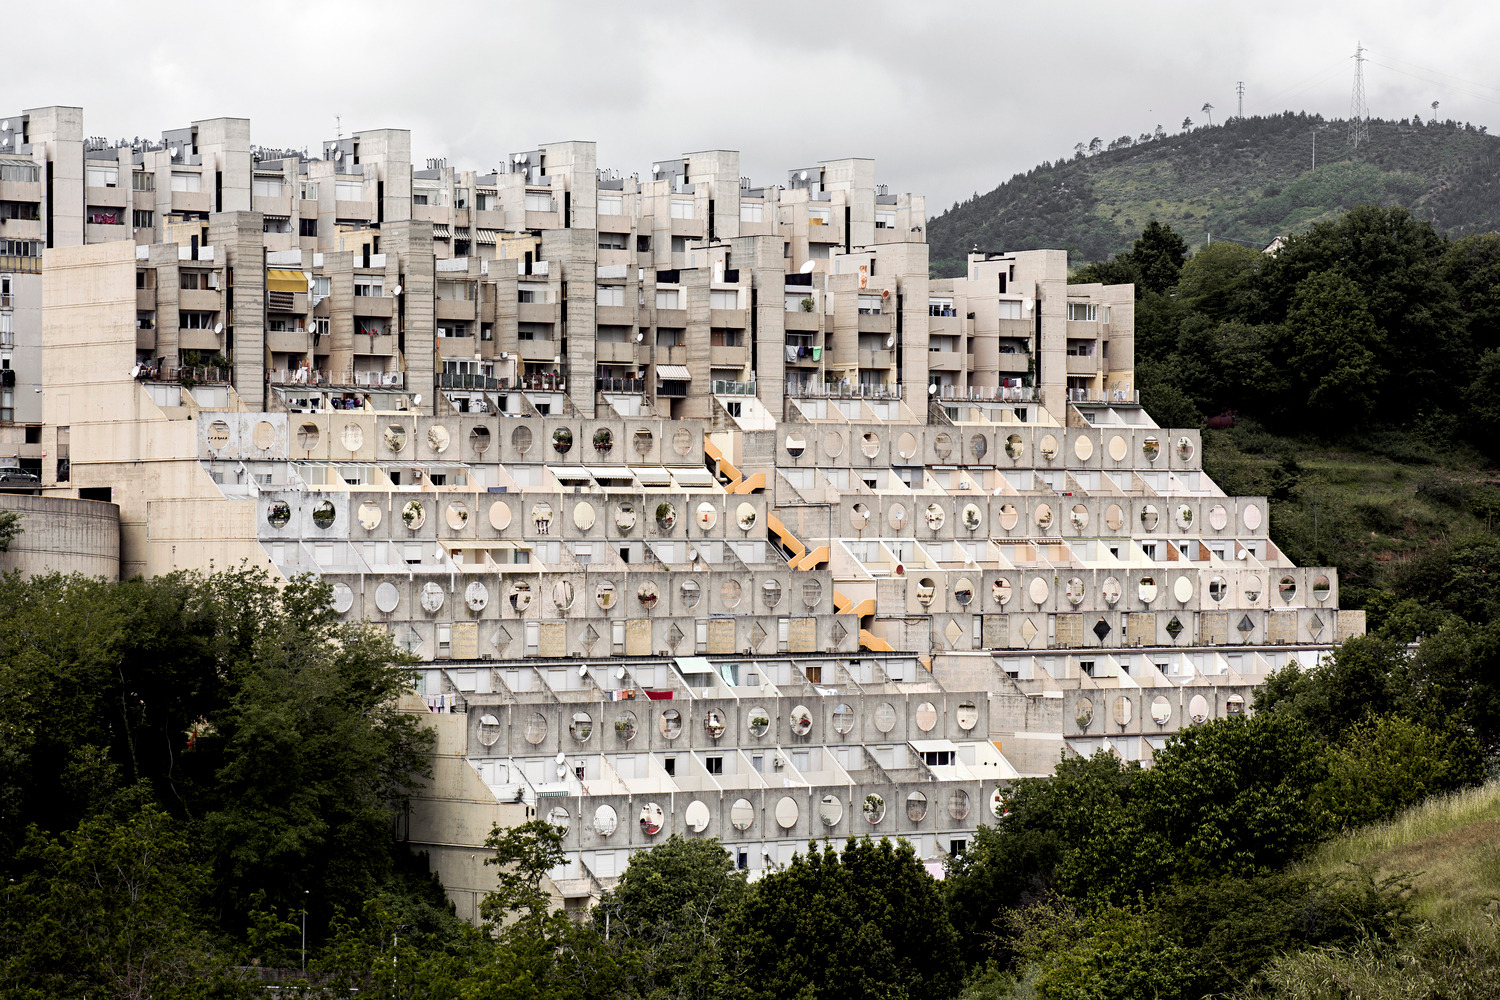 ‘The Washing Machines’ Pegli 3 housing complex, Genoa | image by Stefano Perego